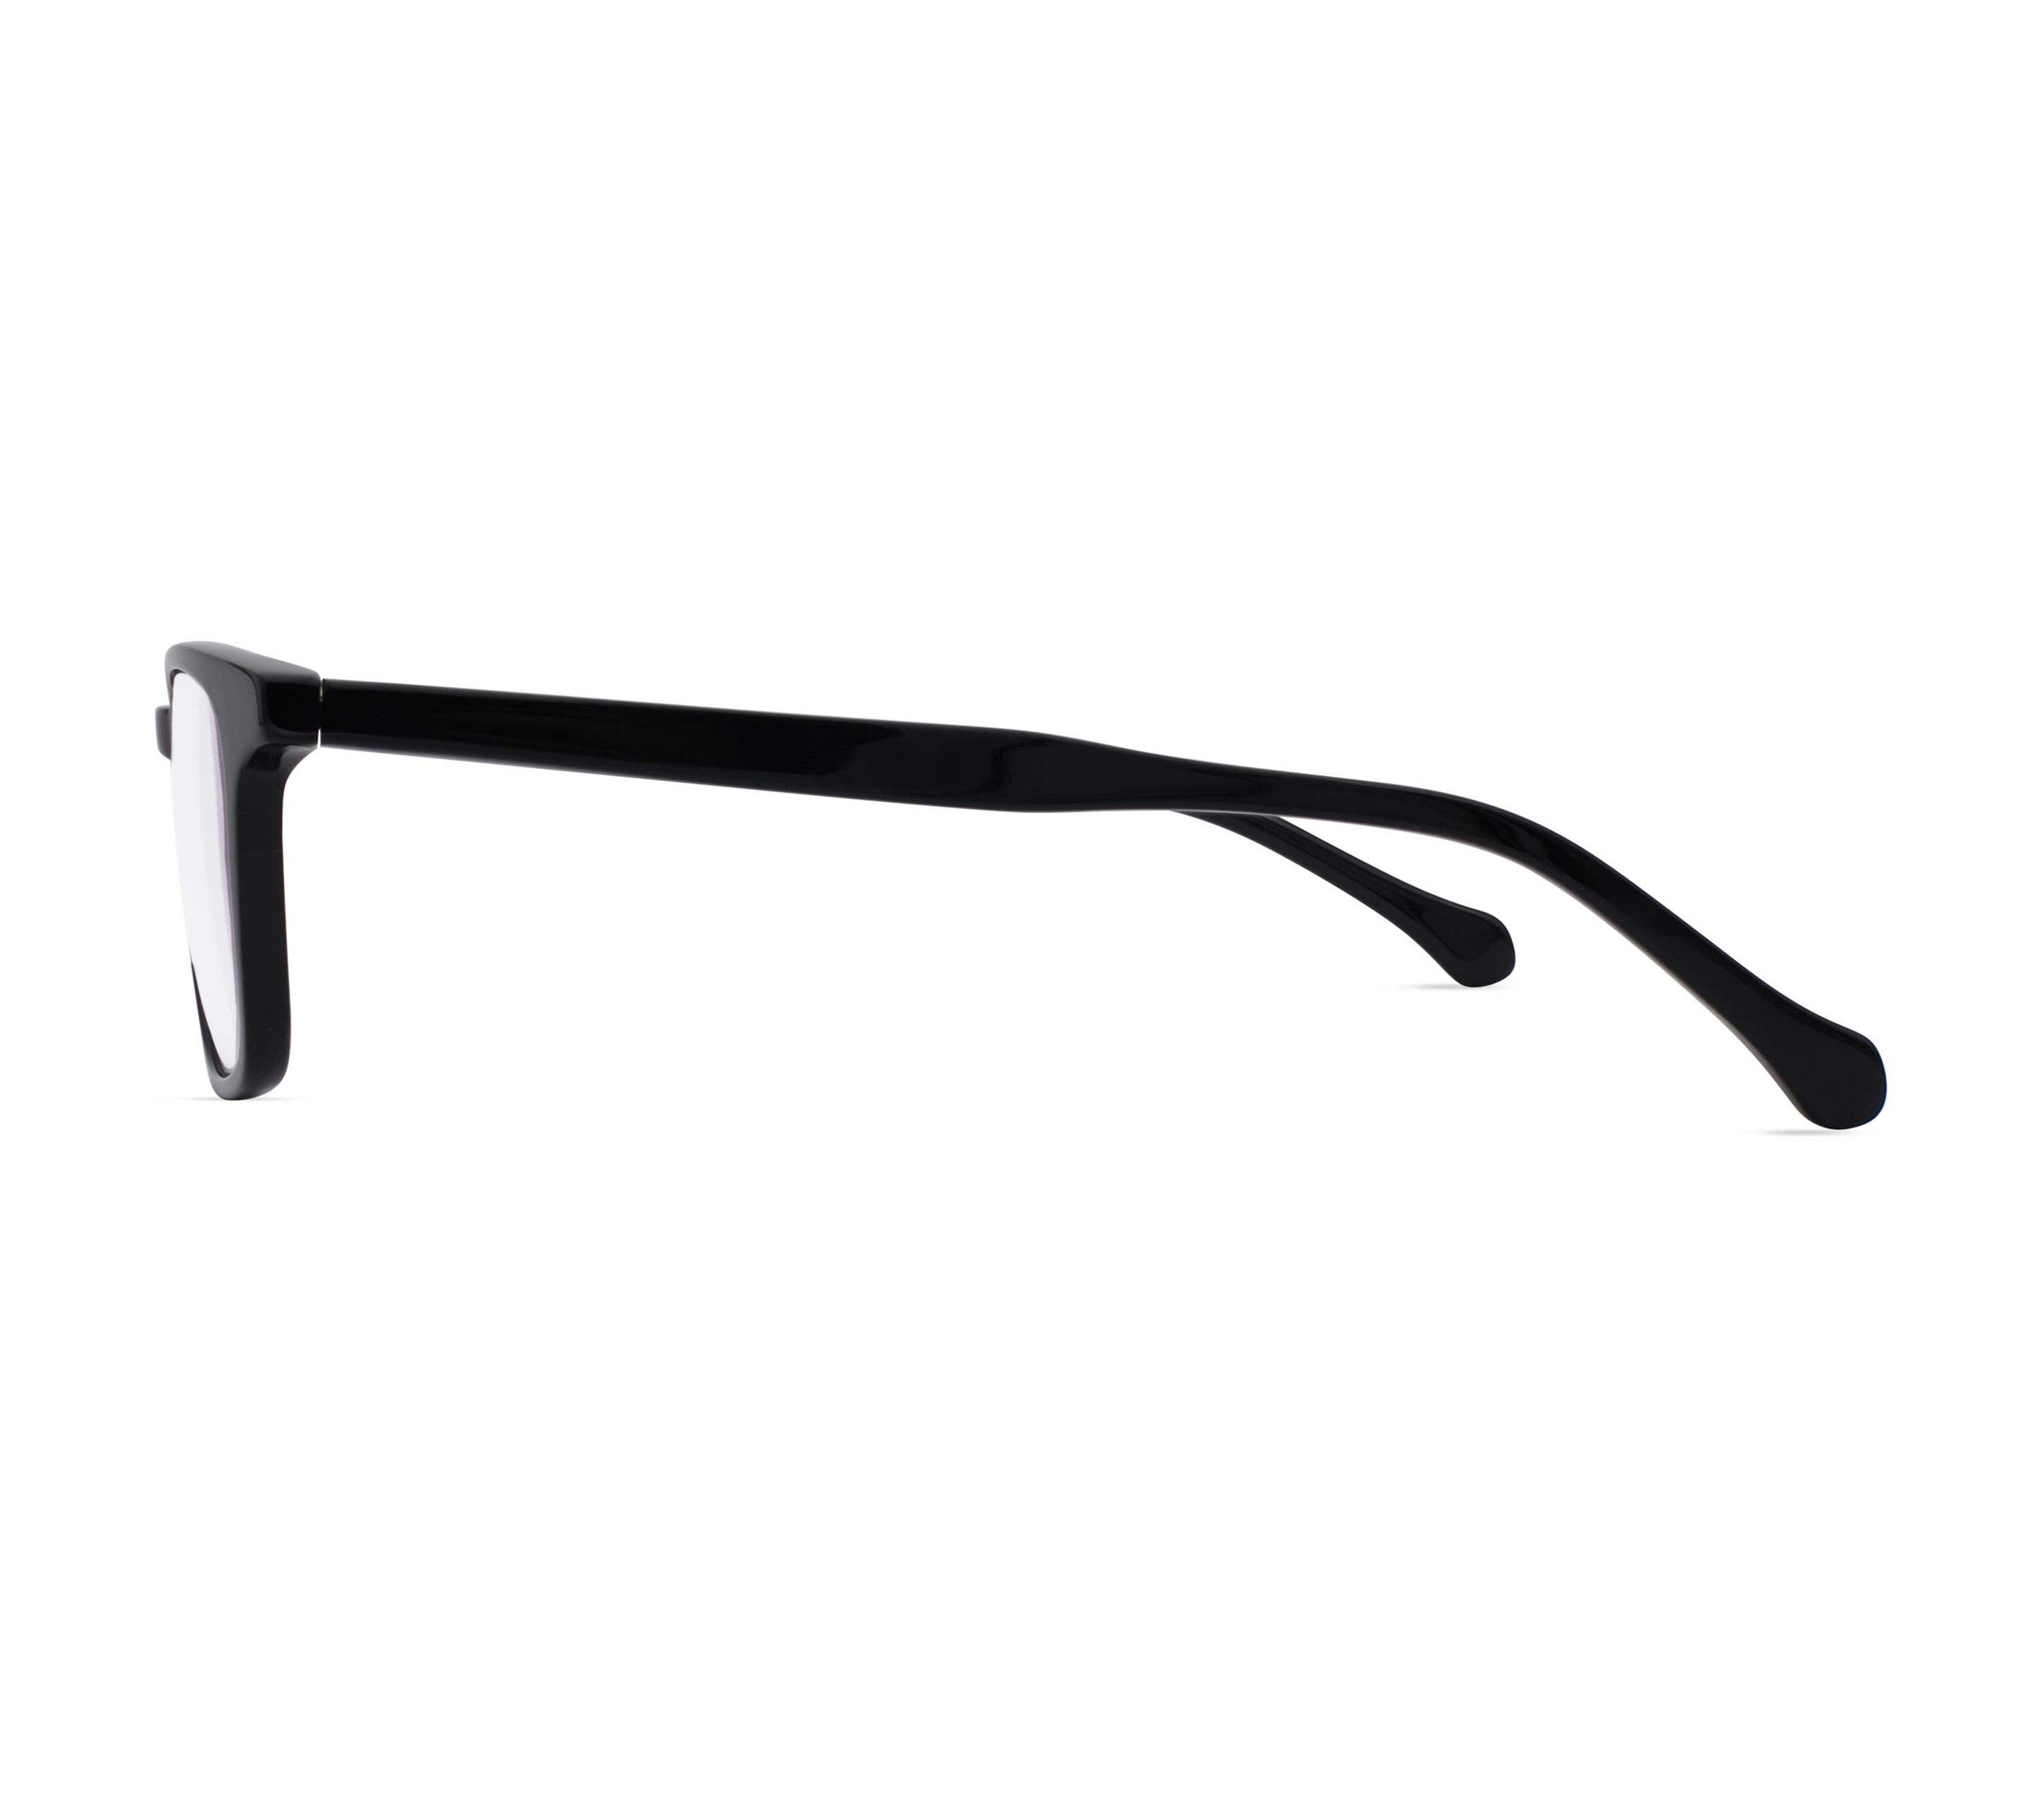 list item 2 of 5 Felix Gray Nash Small Frame Blue Light Glasses Size Large for Kids Ages 9-13